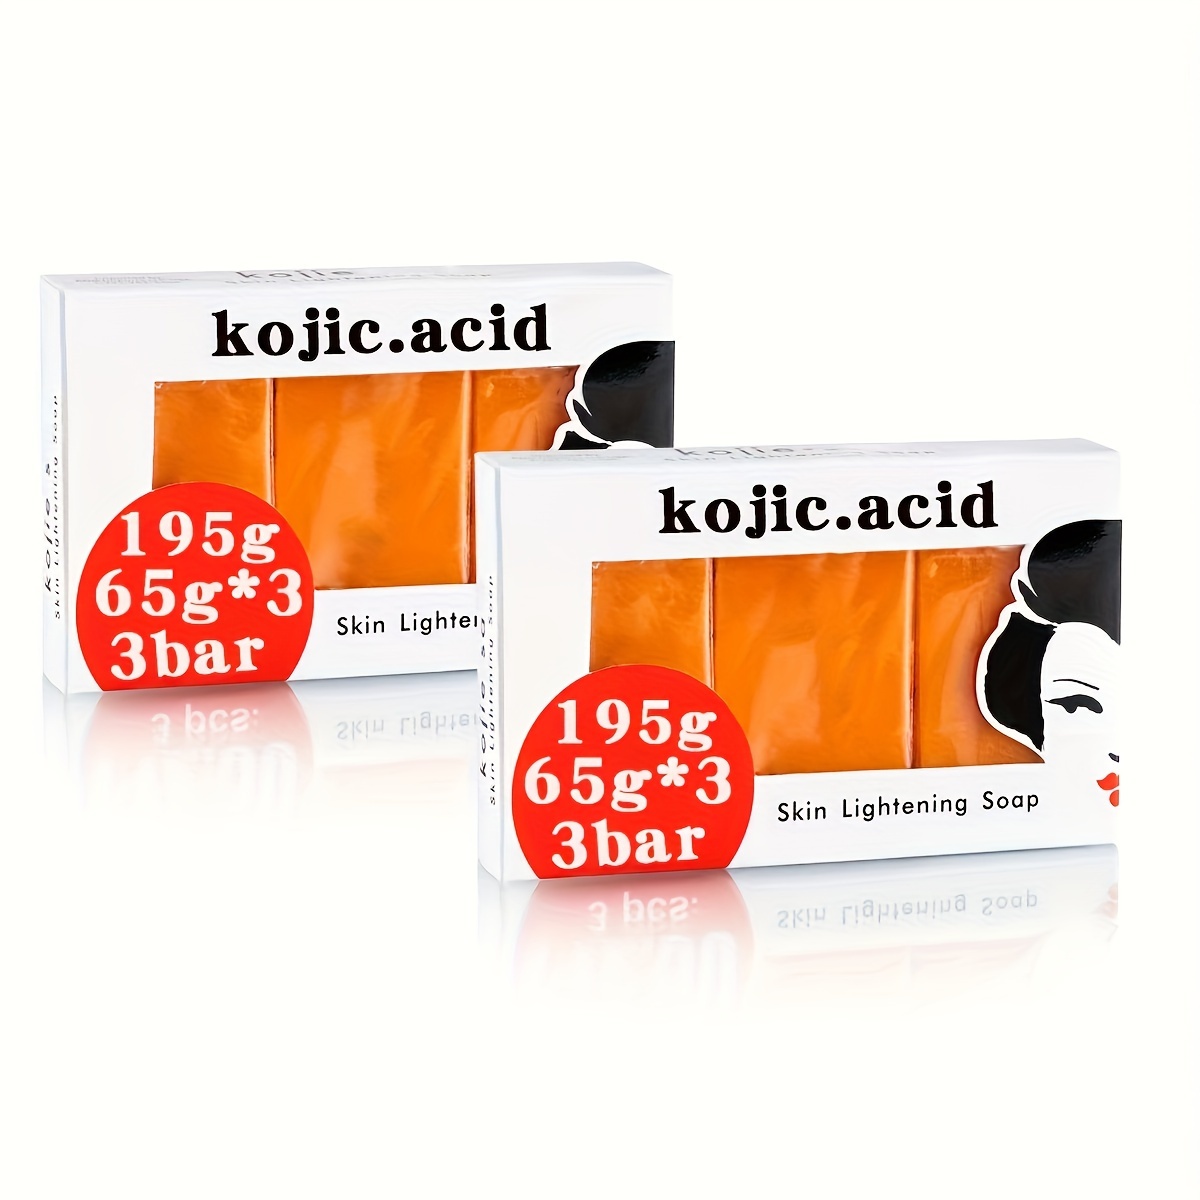 

Kojic Acid Skin Lightening Soap 195g, 3 Bar Pack – Moisturizing Cream Formula, Alcohol-free, With Centella Asiatica For Improved Skin Texture & Tone